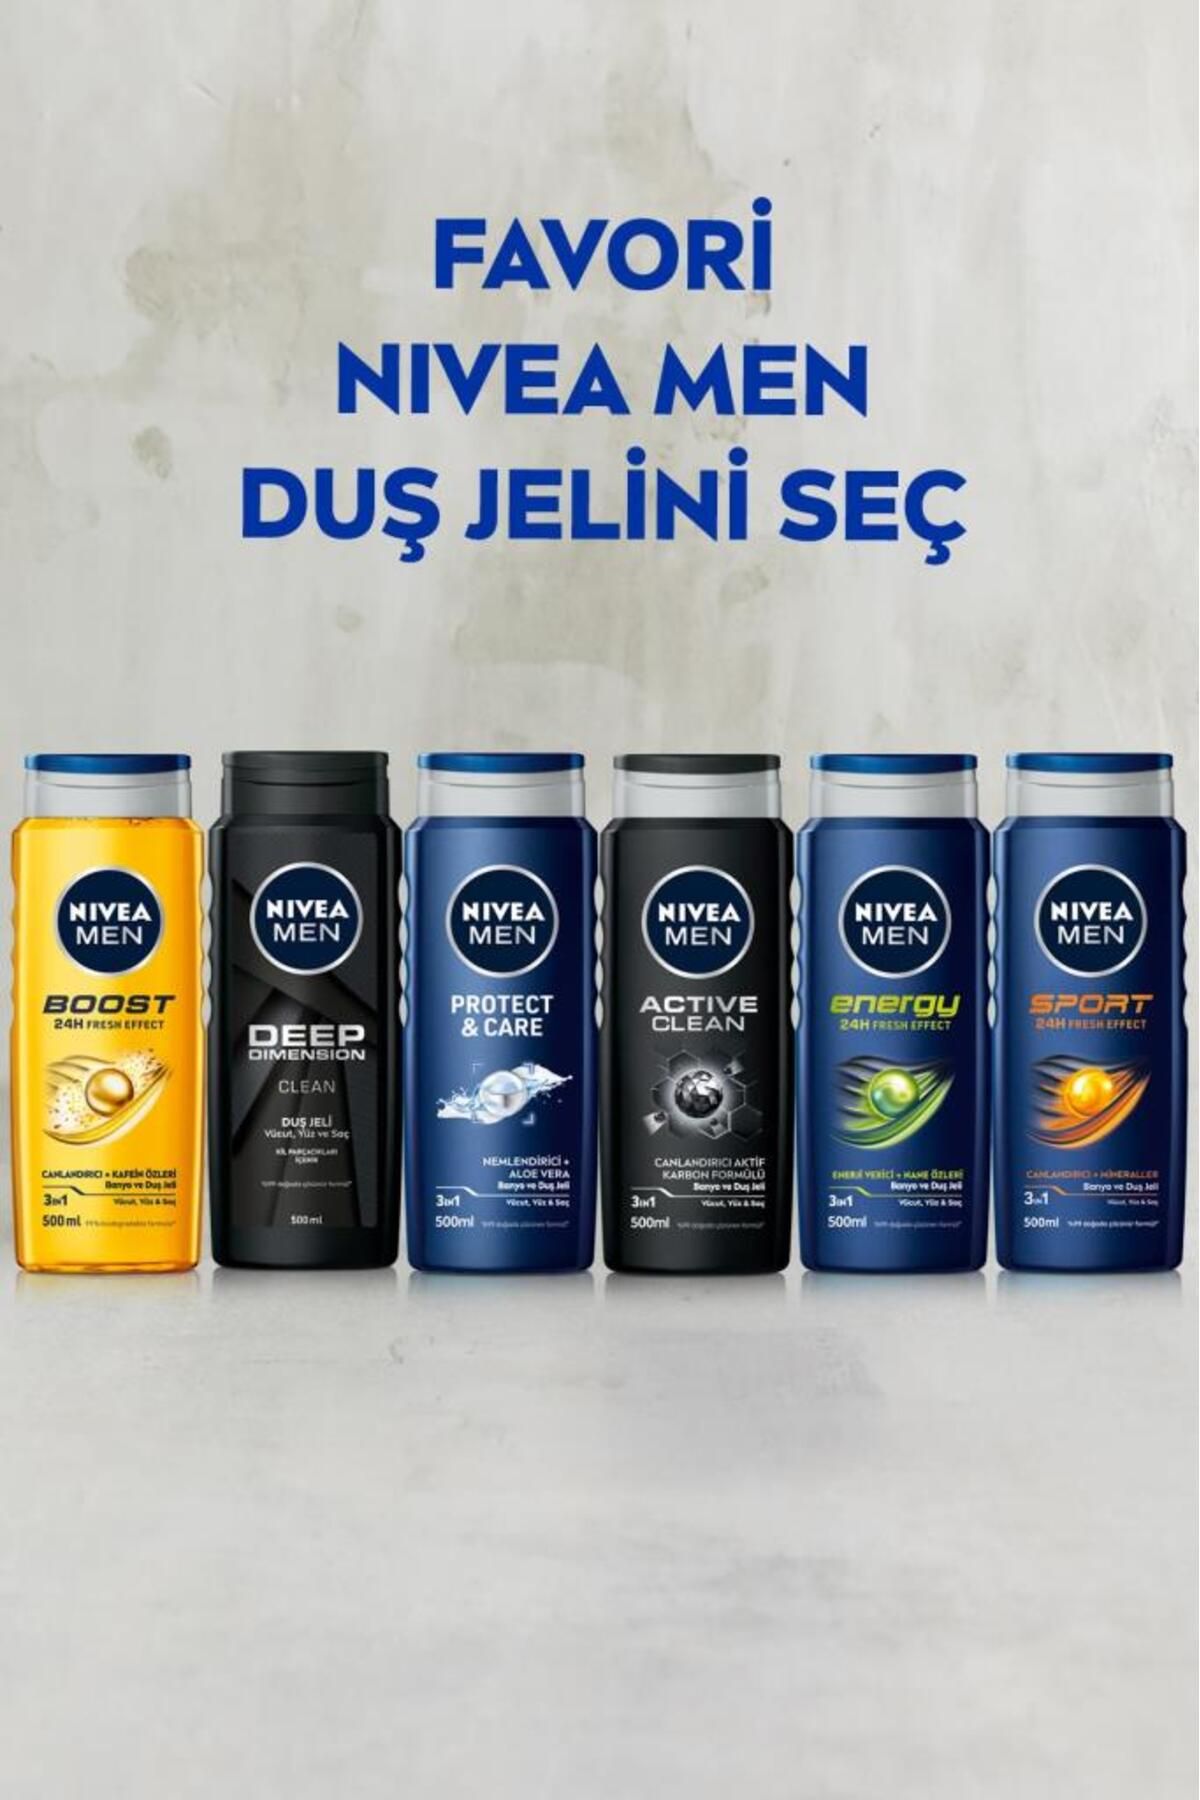 NIVEA ژل حمام مردانه فعال تمیز کننده 500 میلی لیتر، بدن صد مو، تازگی 24 ساعته، کربن فعال، بوی مردانه